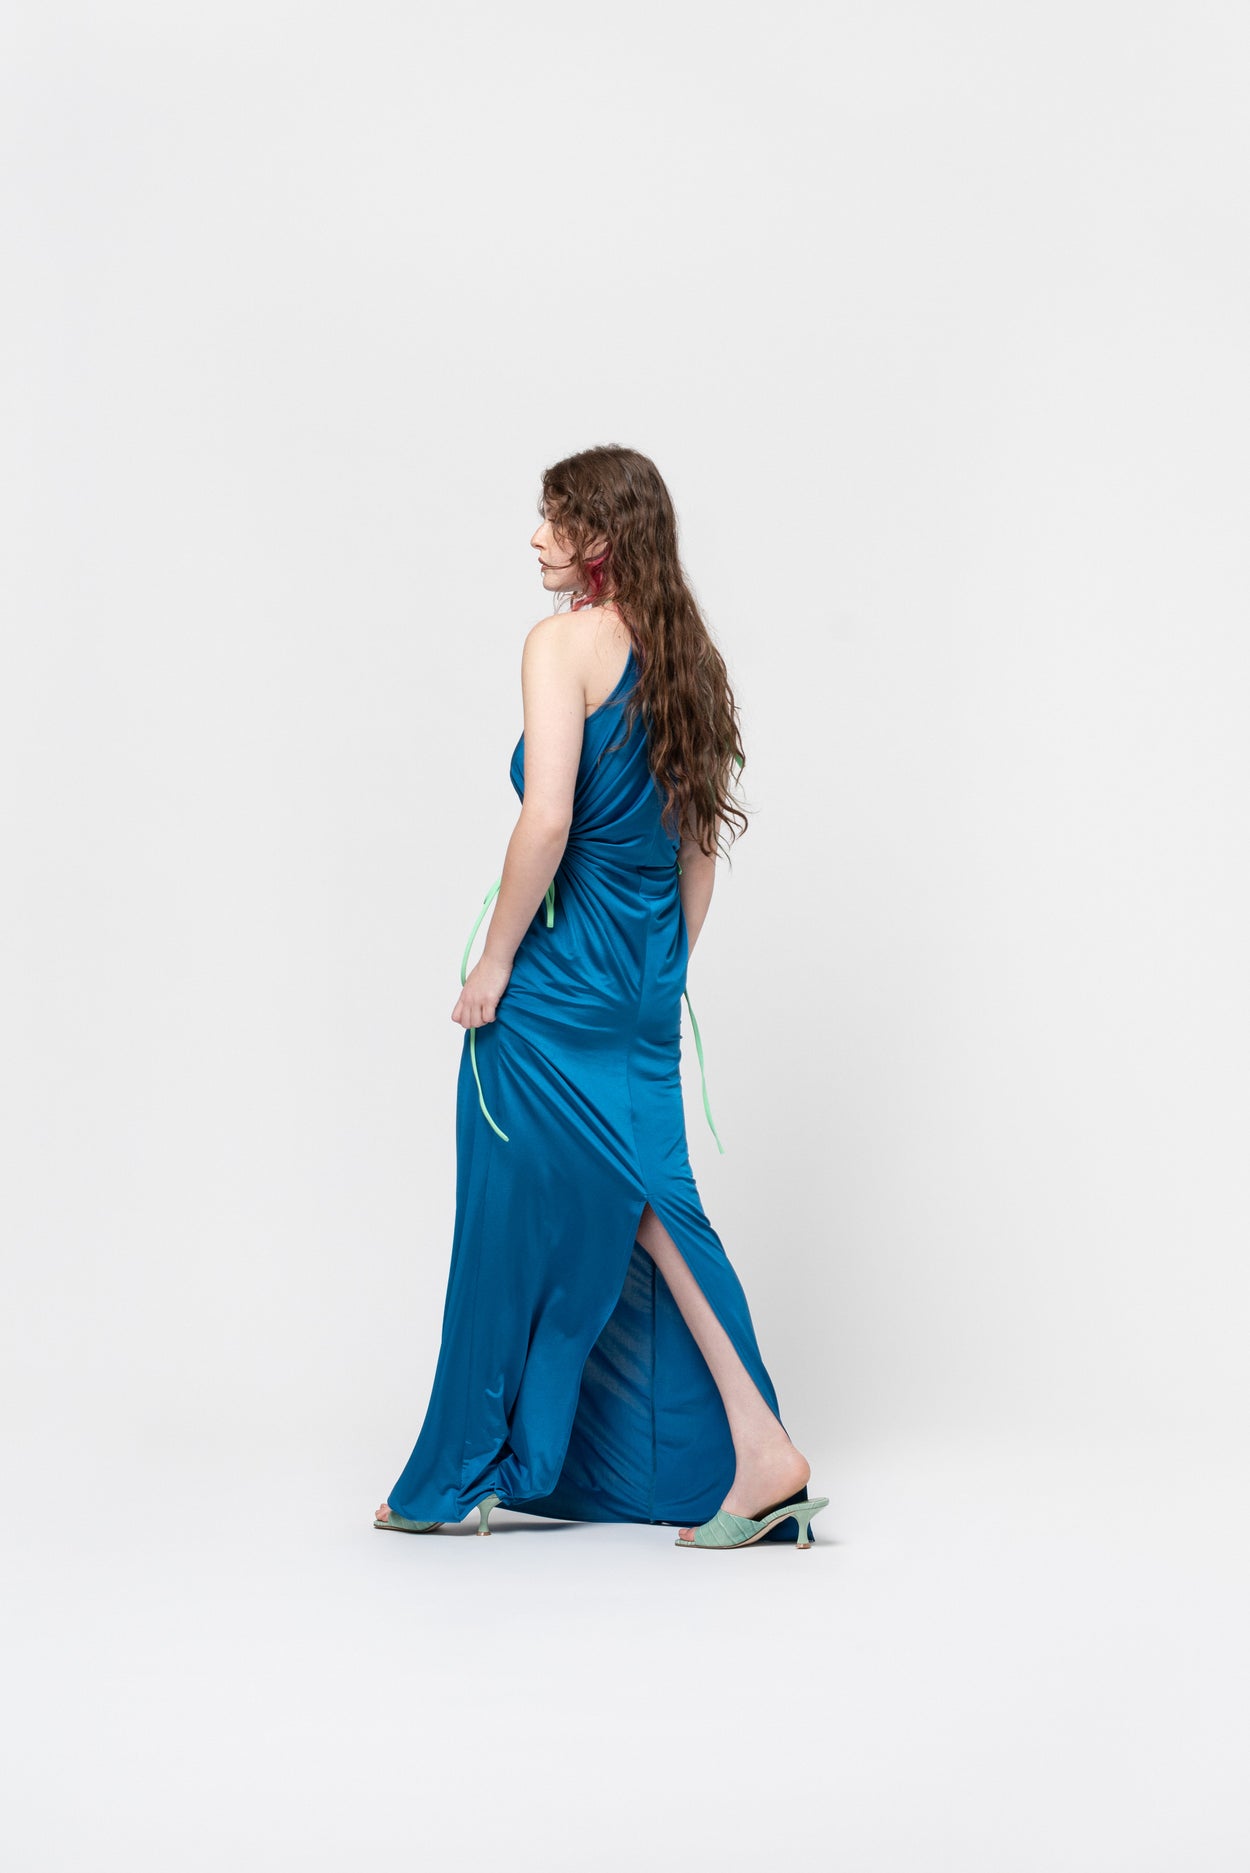 The Royal Blue Hourglass Dress